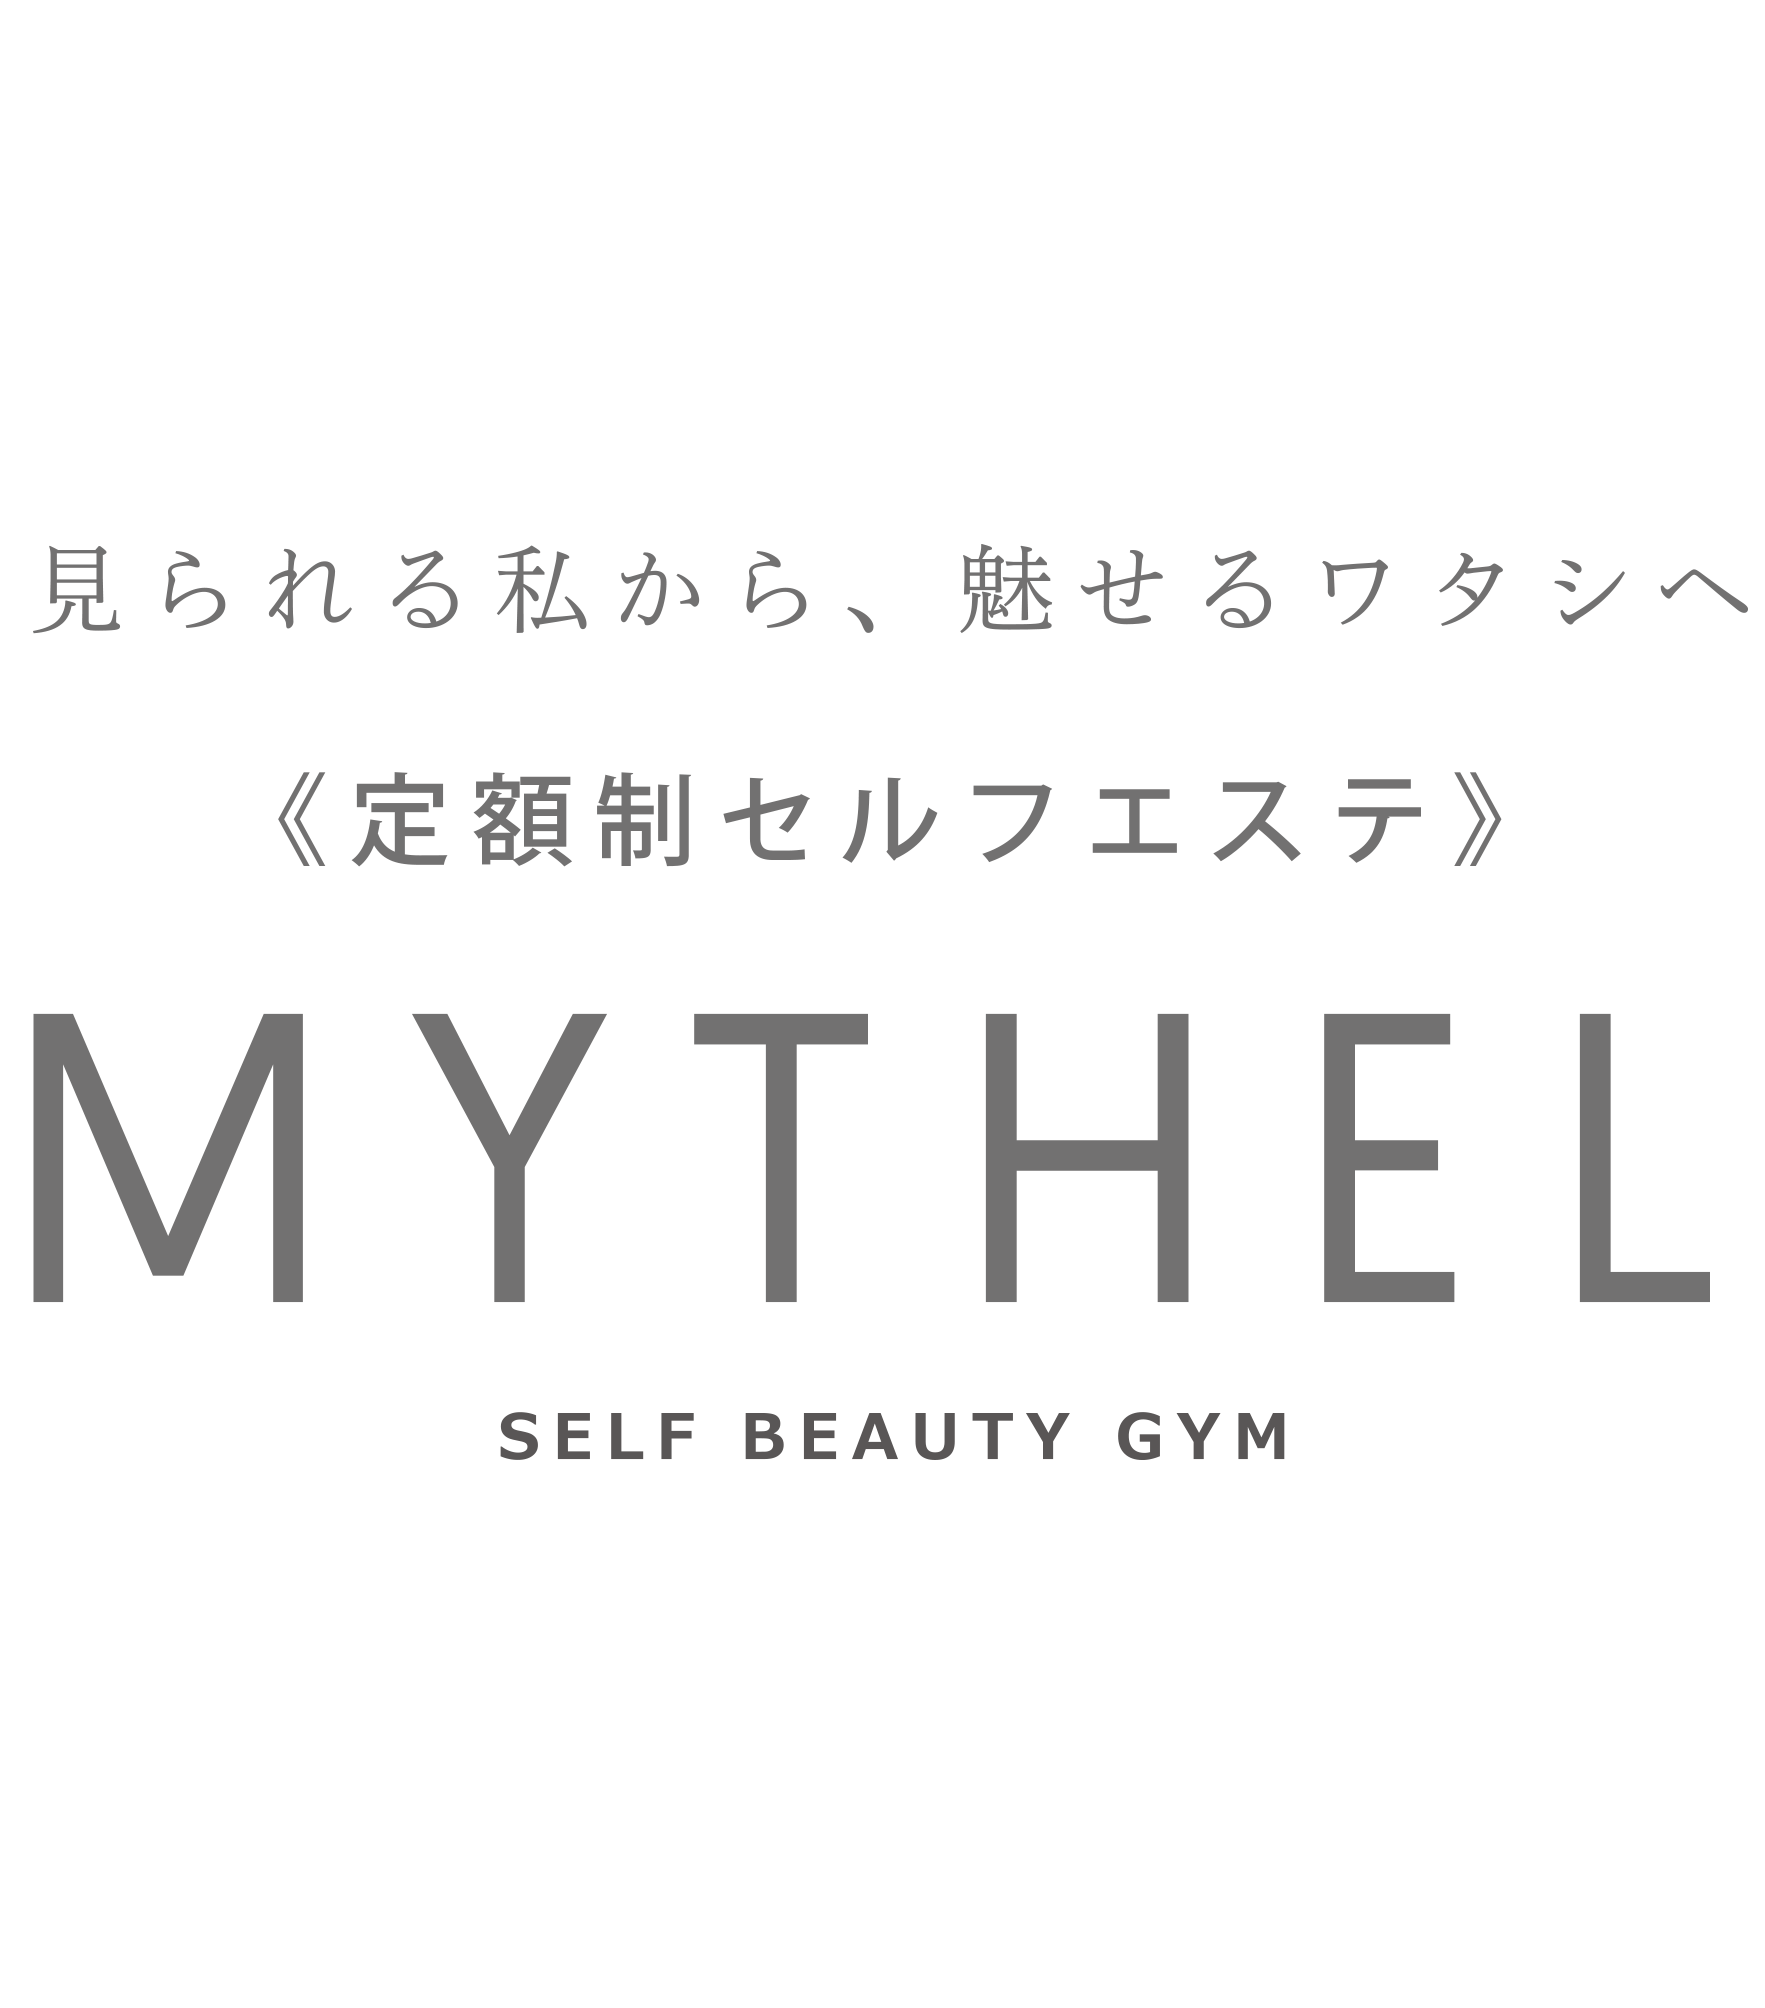 MYTHEL